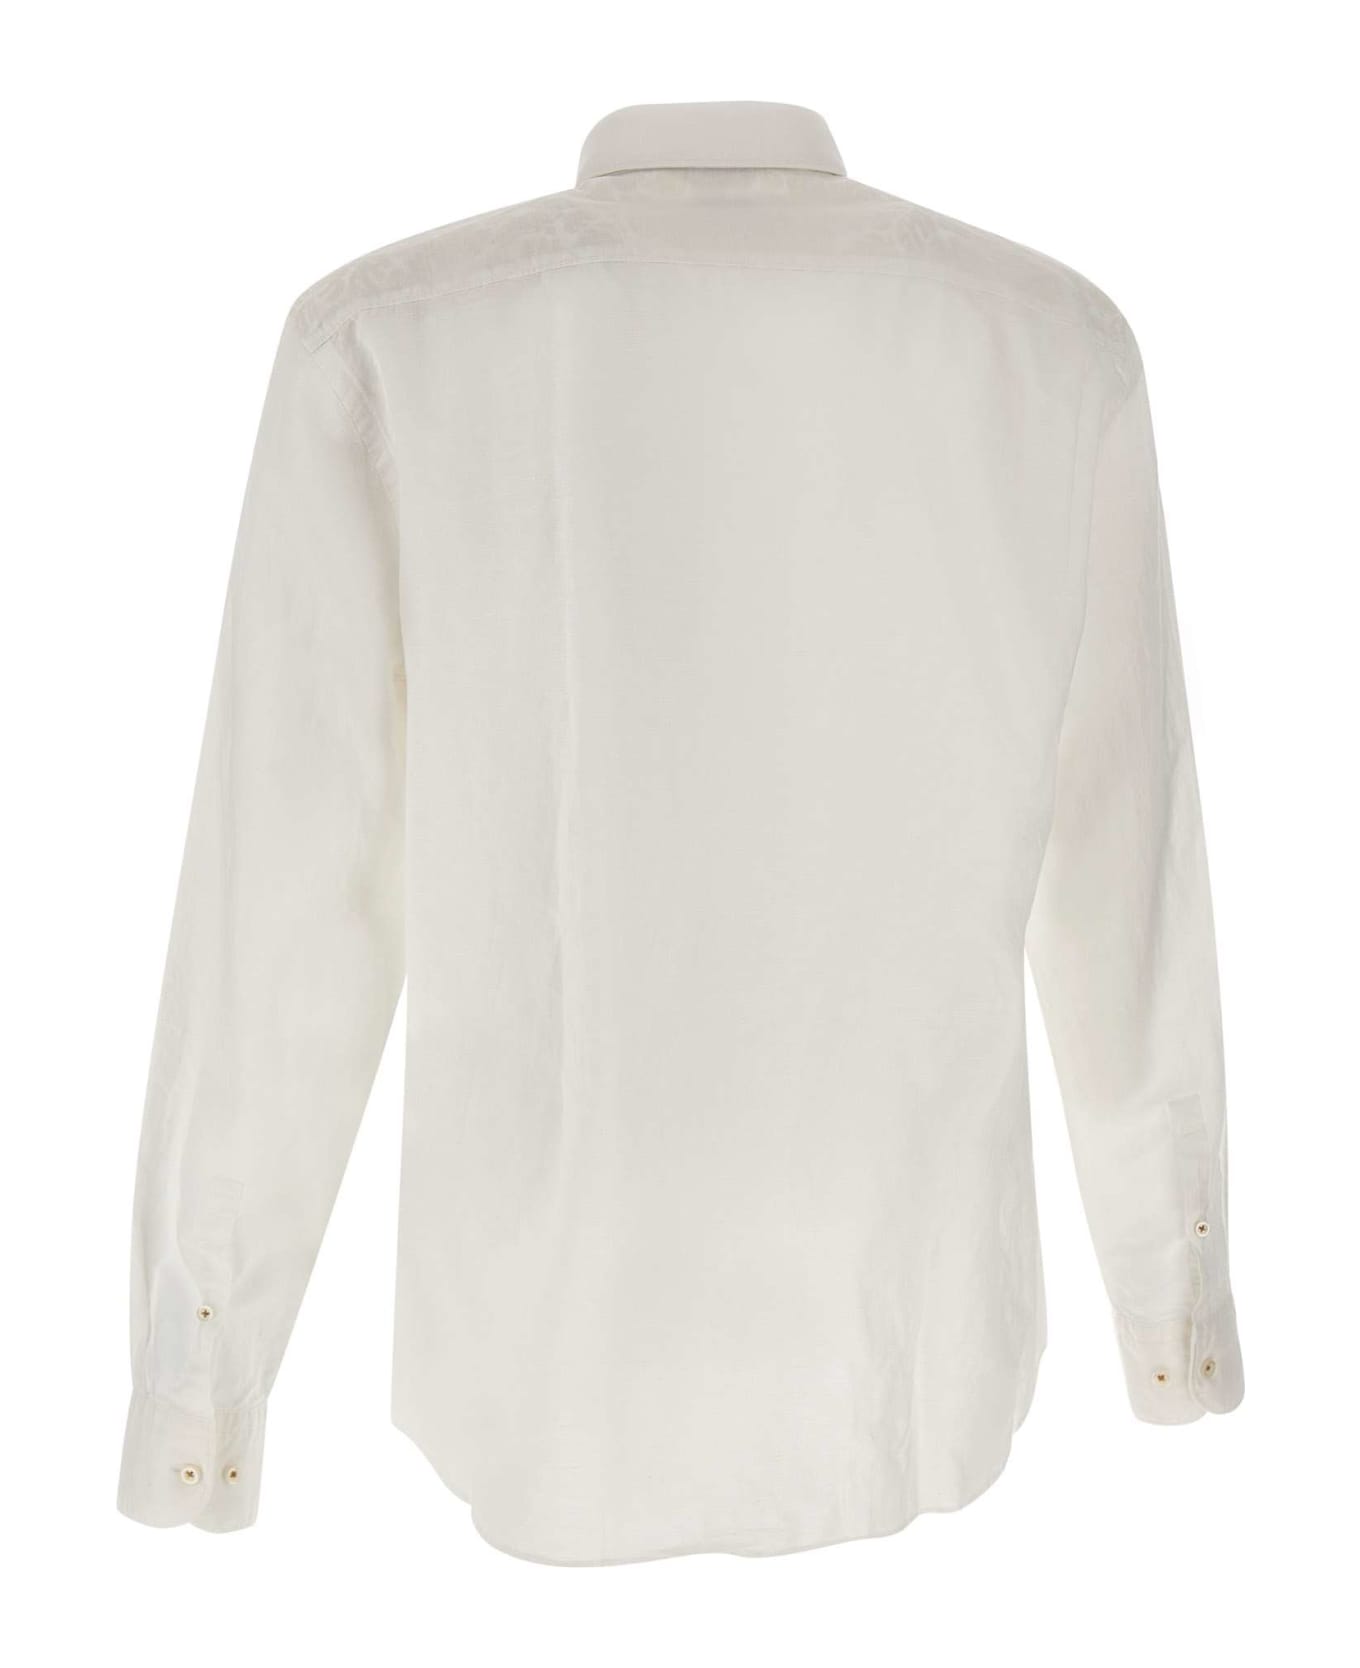 Hugo Boss "c-hal-kent" Cotton And Linen Shirt - WHITE シャツ